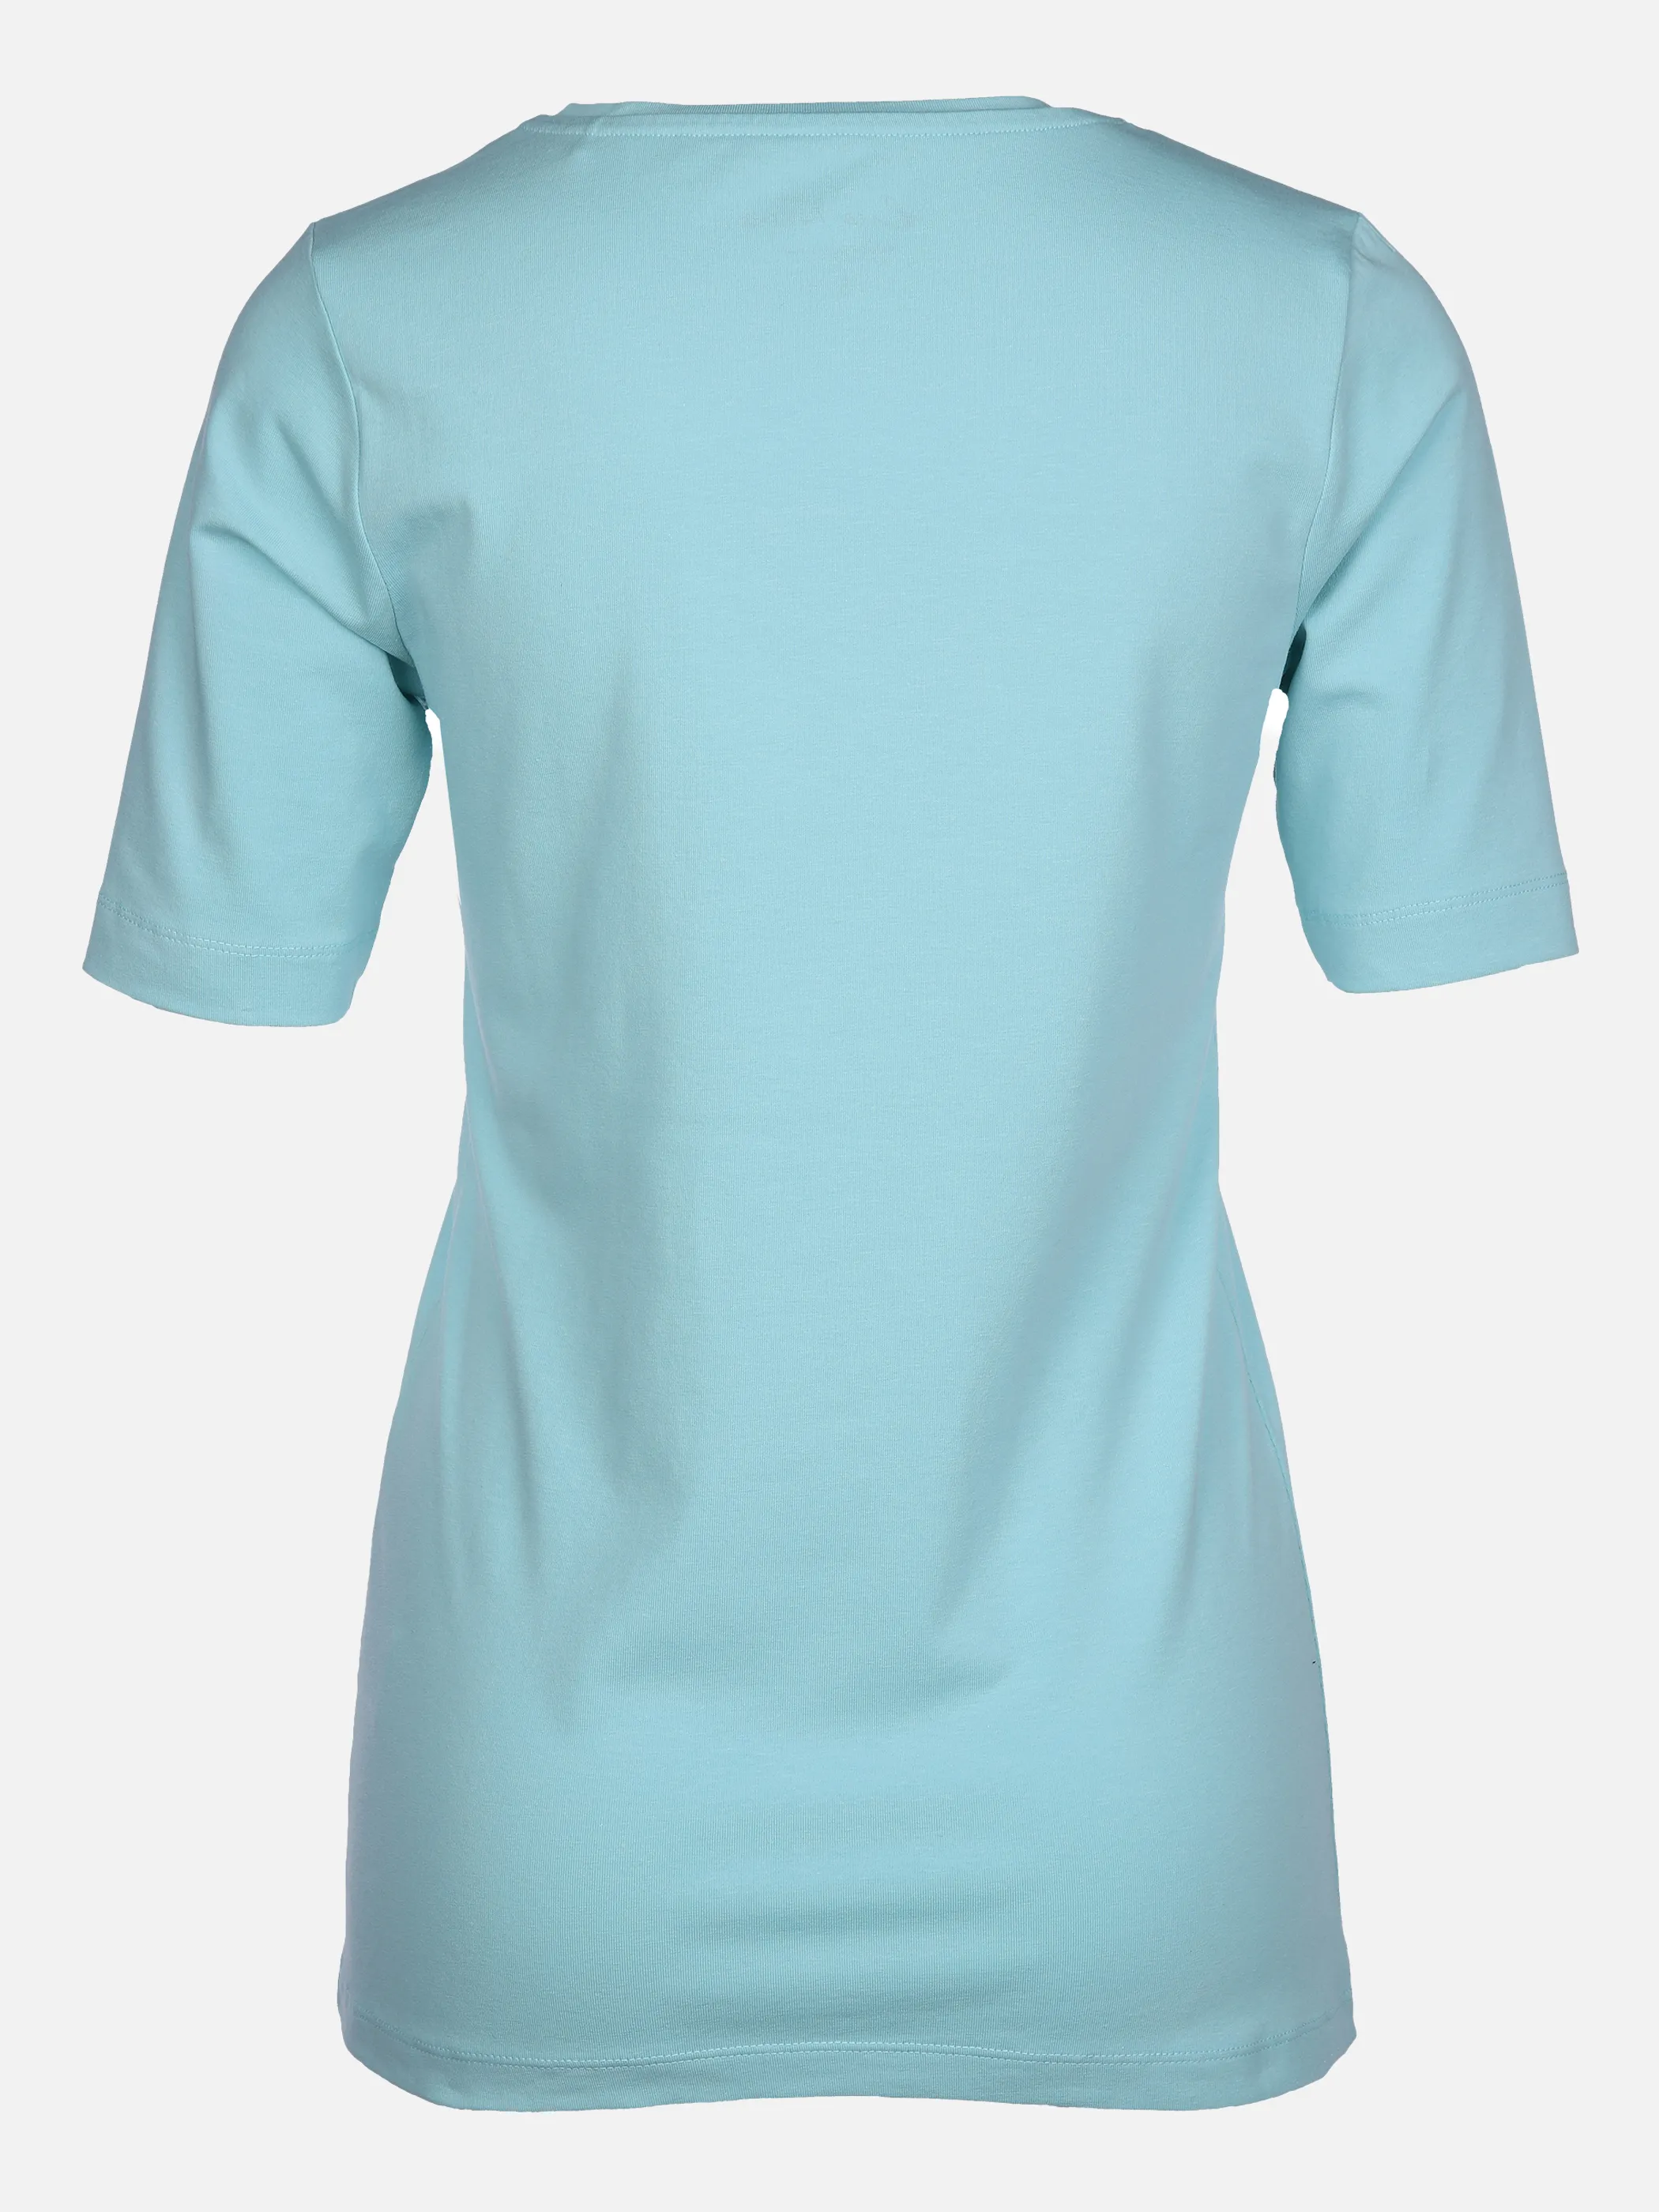 Lisa Tossa Da-Basic-Shirt m. Rundhals Grün 851518 SALBEI 2